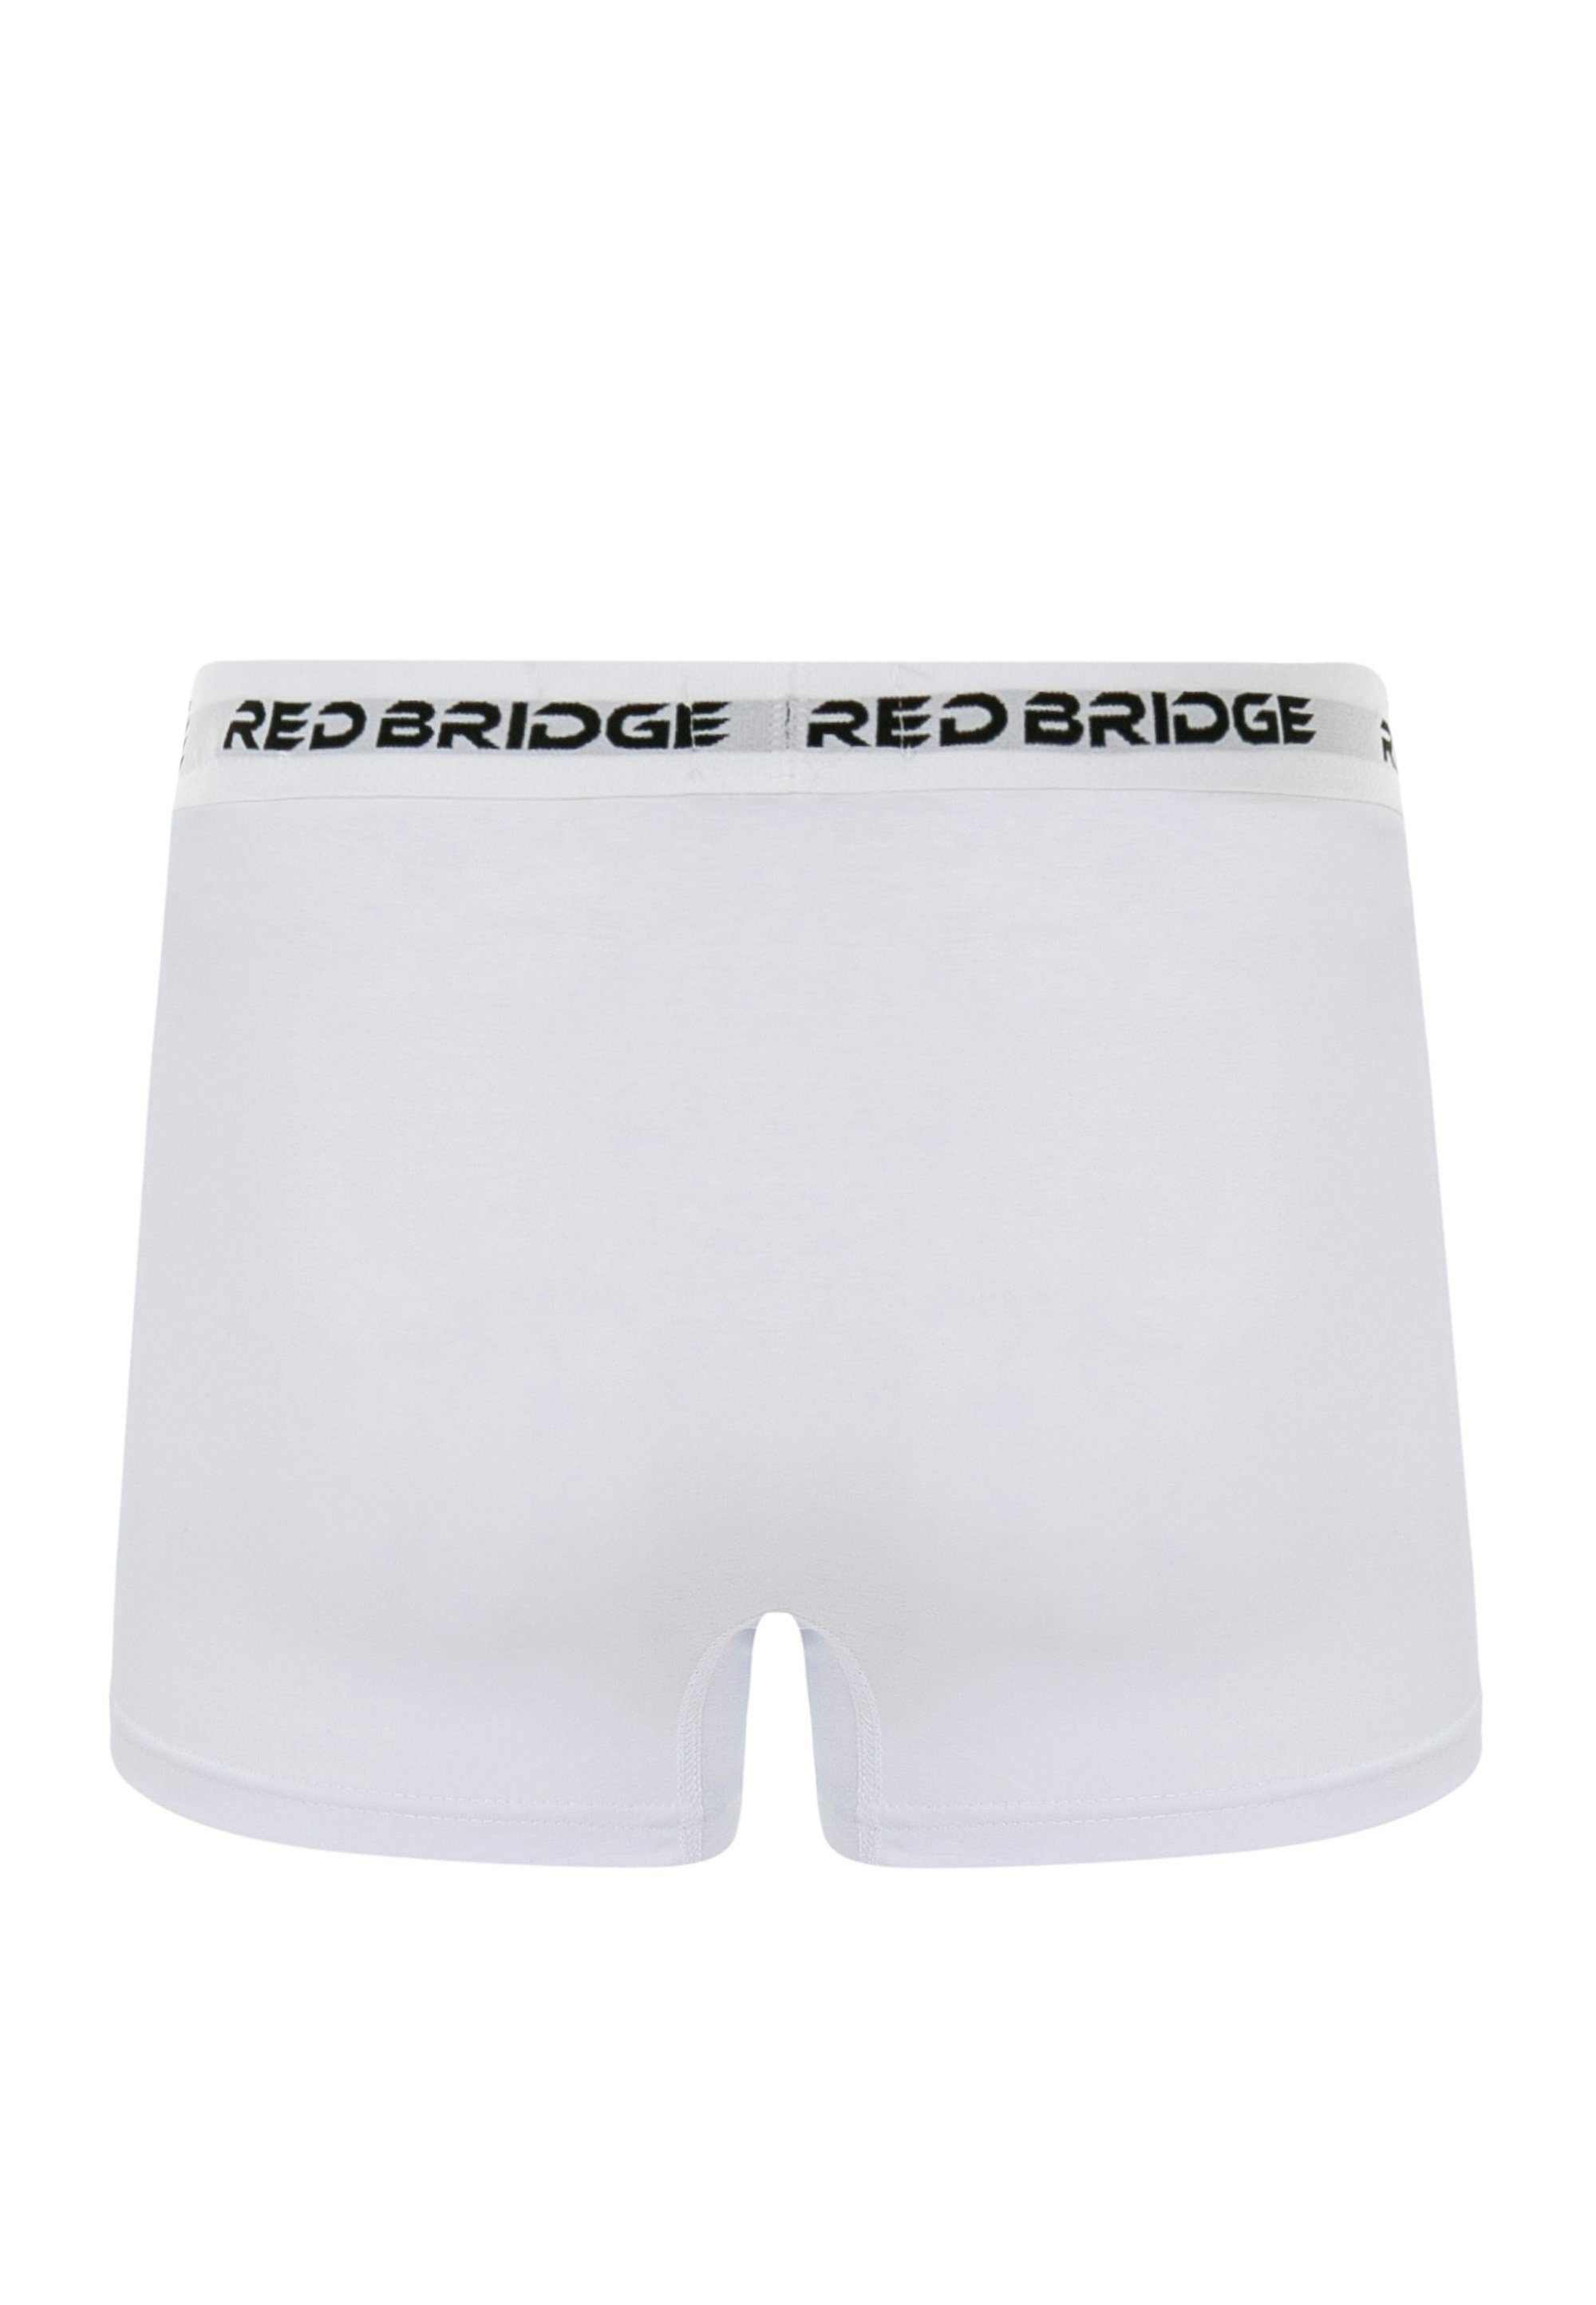 Bangor Boxershorts trendigem mit weiß RedBridge Logobund (10-St)